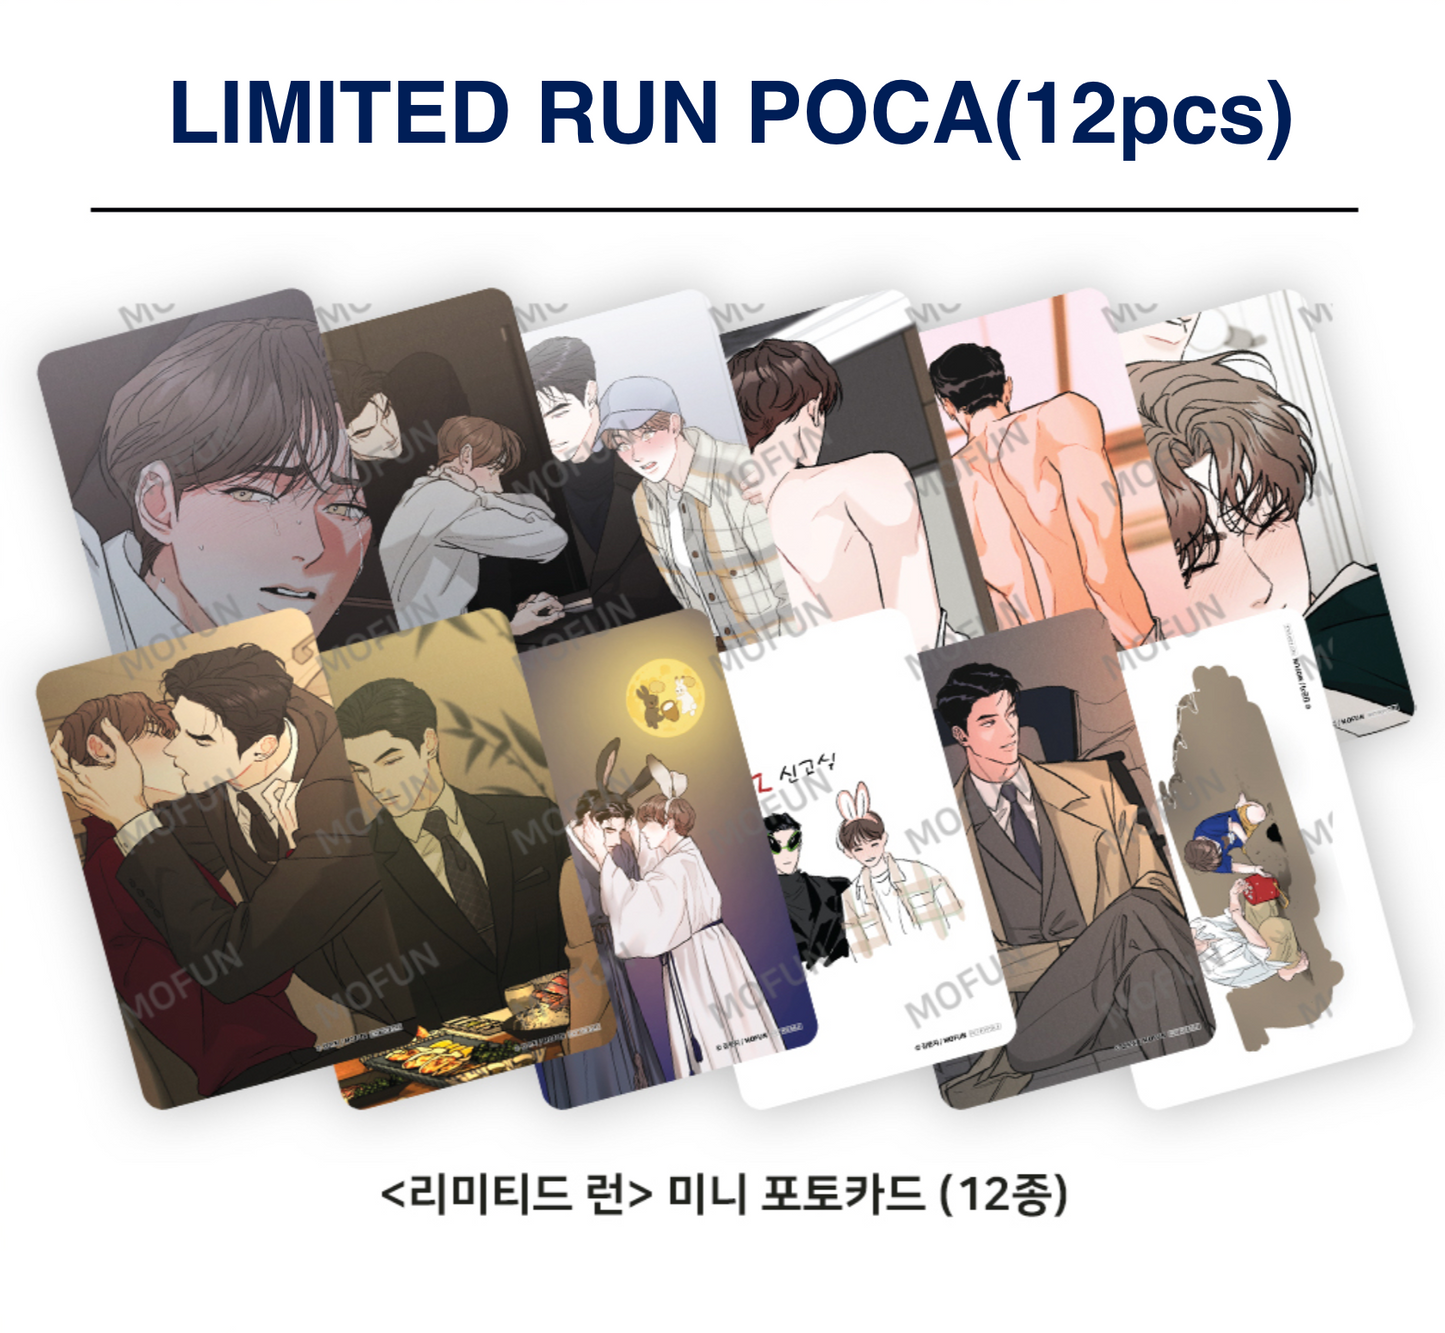 Limited Run : Poca 12pcs full set